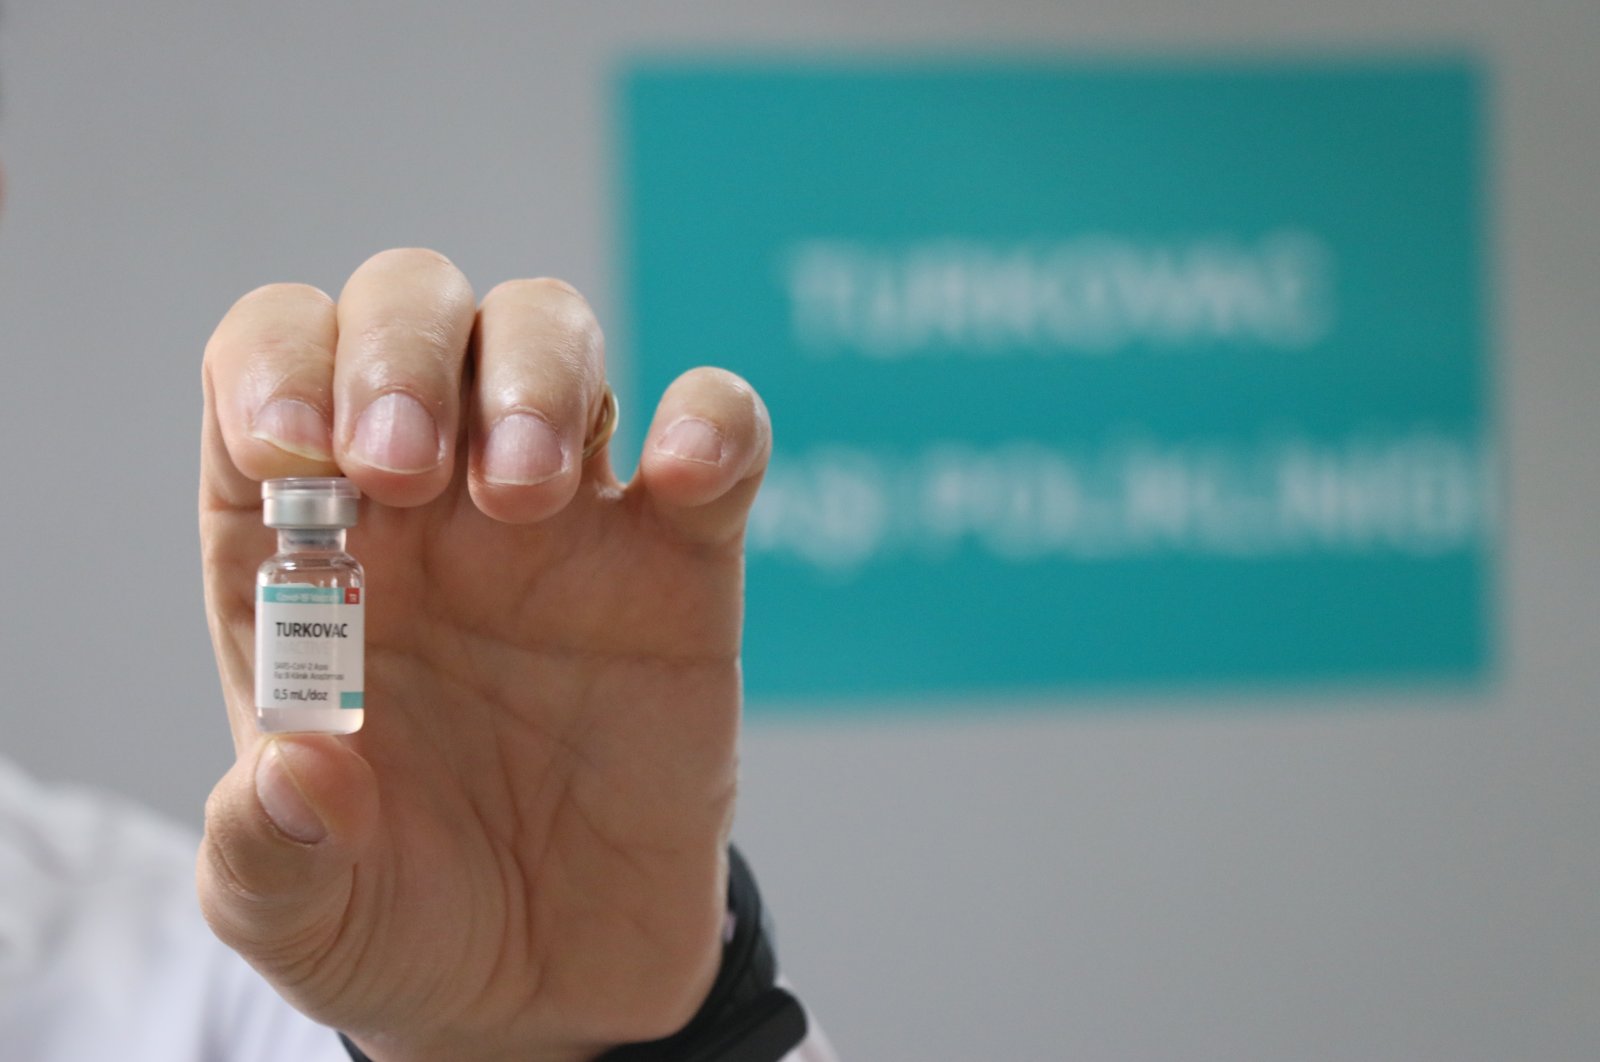 Kementerian Kesehatan meminta otorisasi untuk vaksin COVID-19 Turkovac